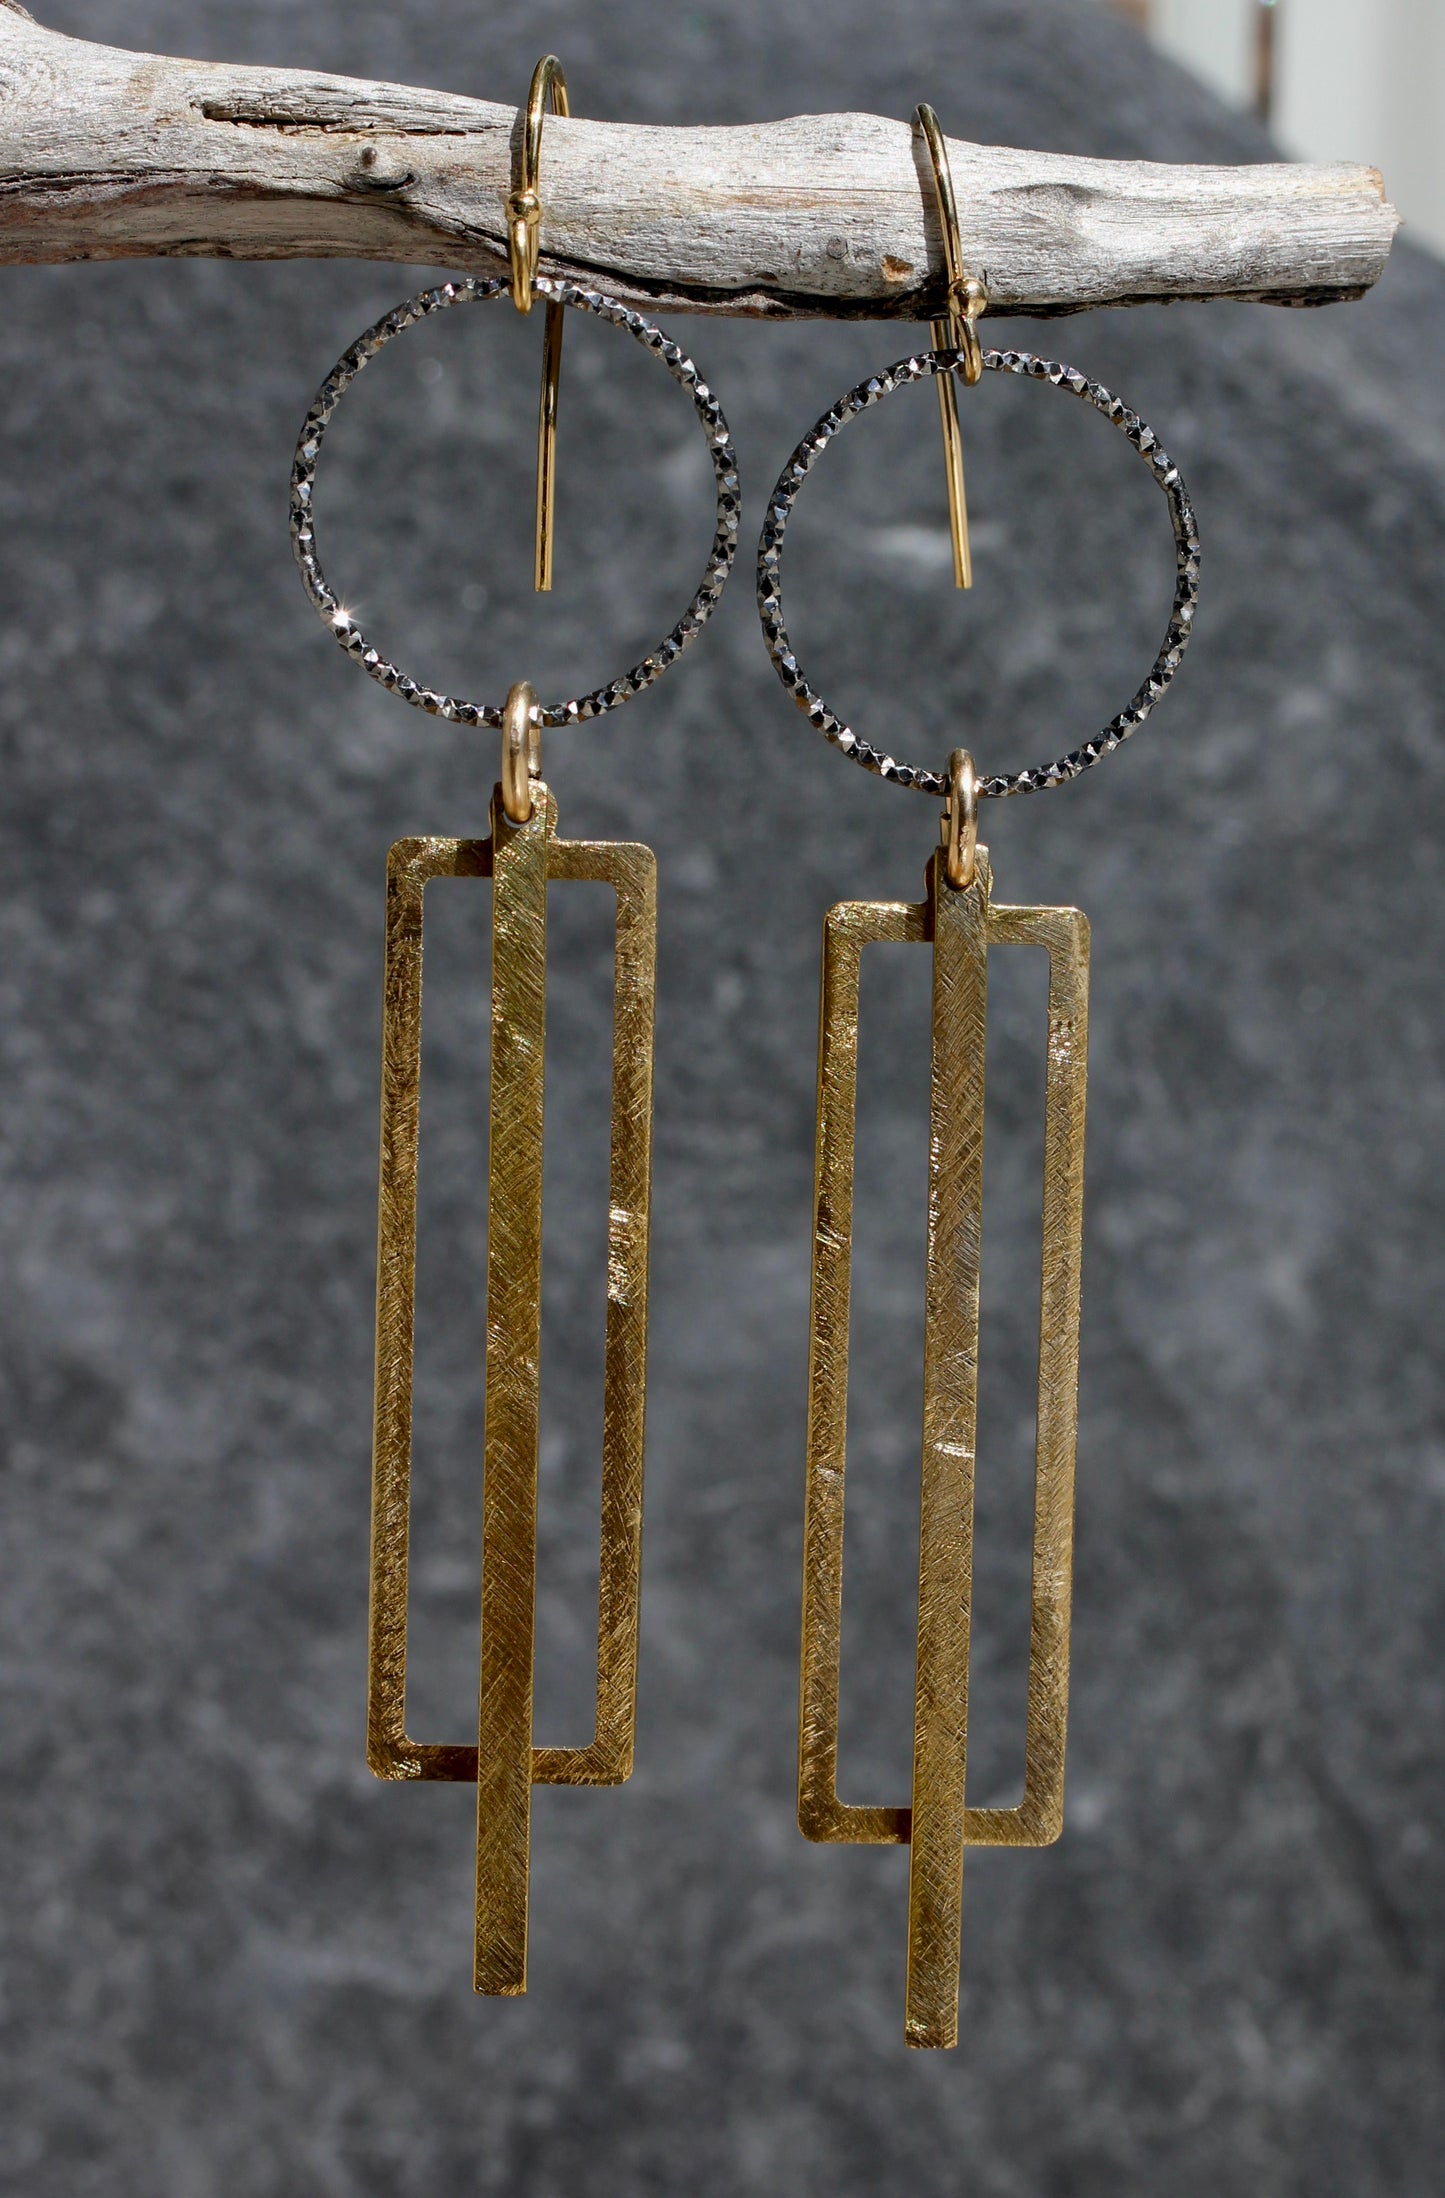 Black and Gold Geometric Earrings